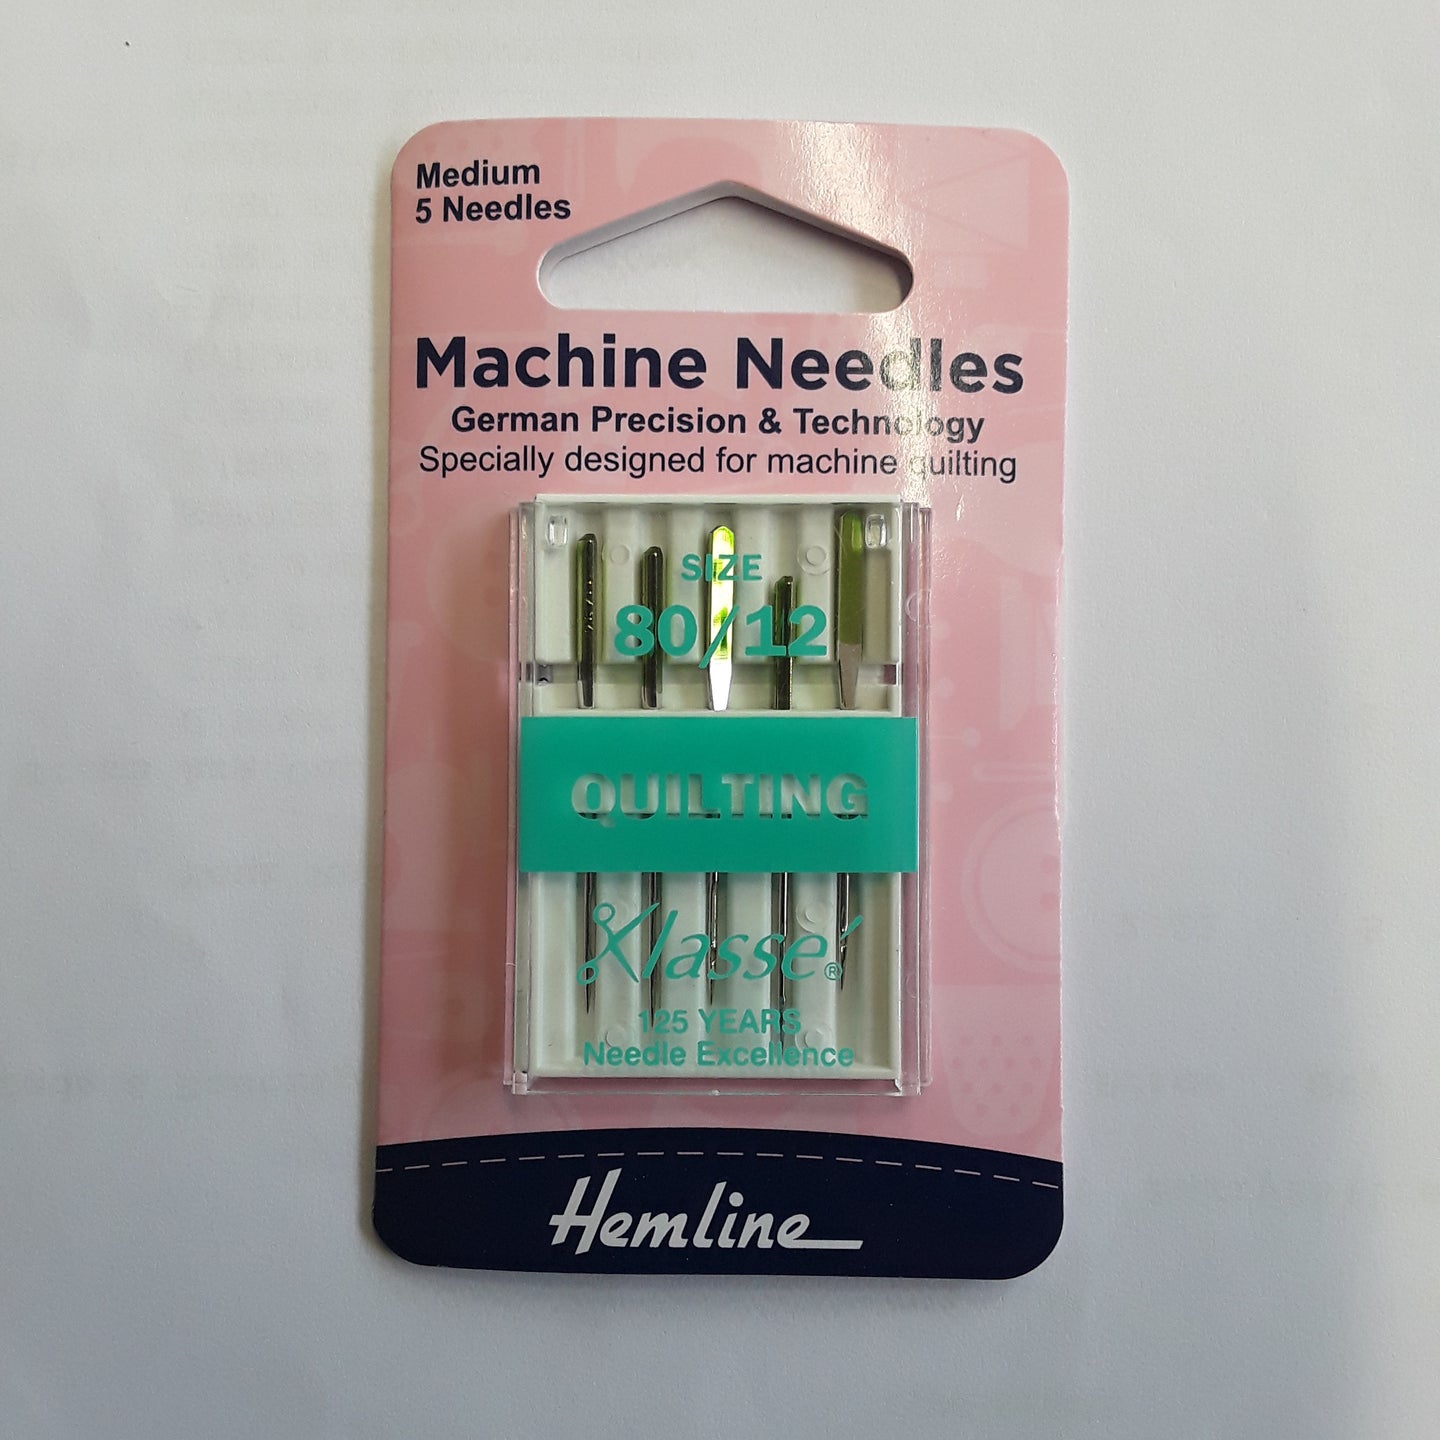 Hemline Machine Needles for quilting